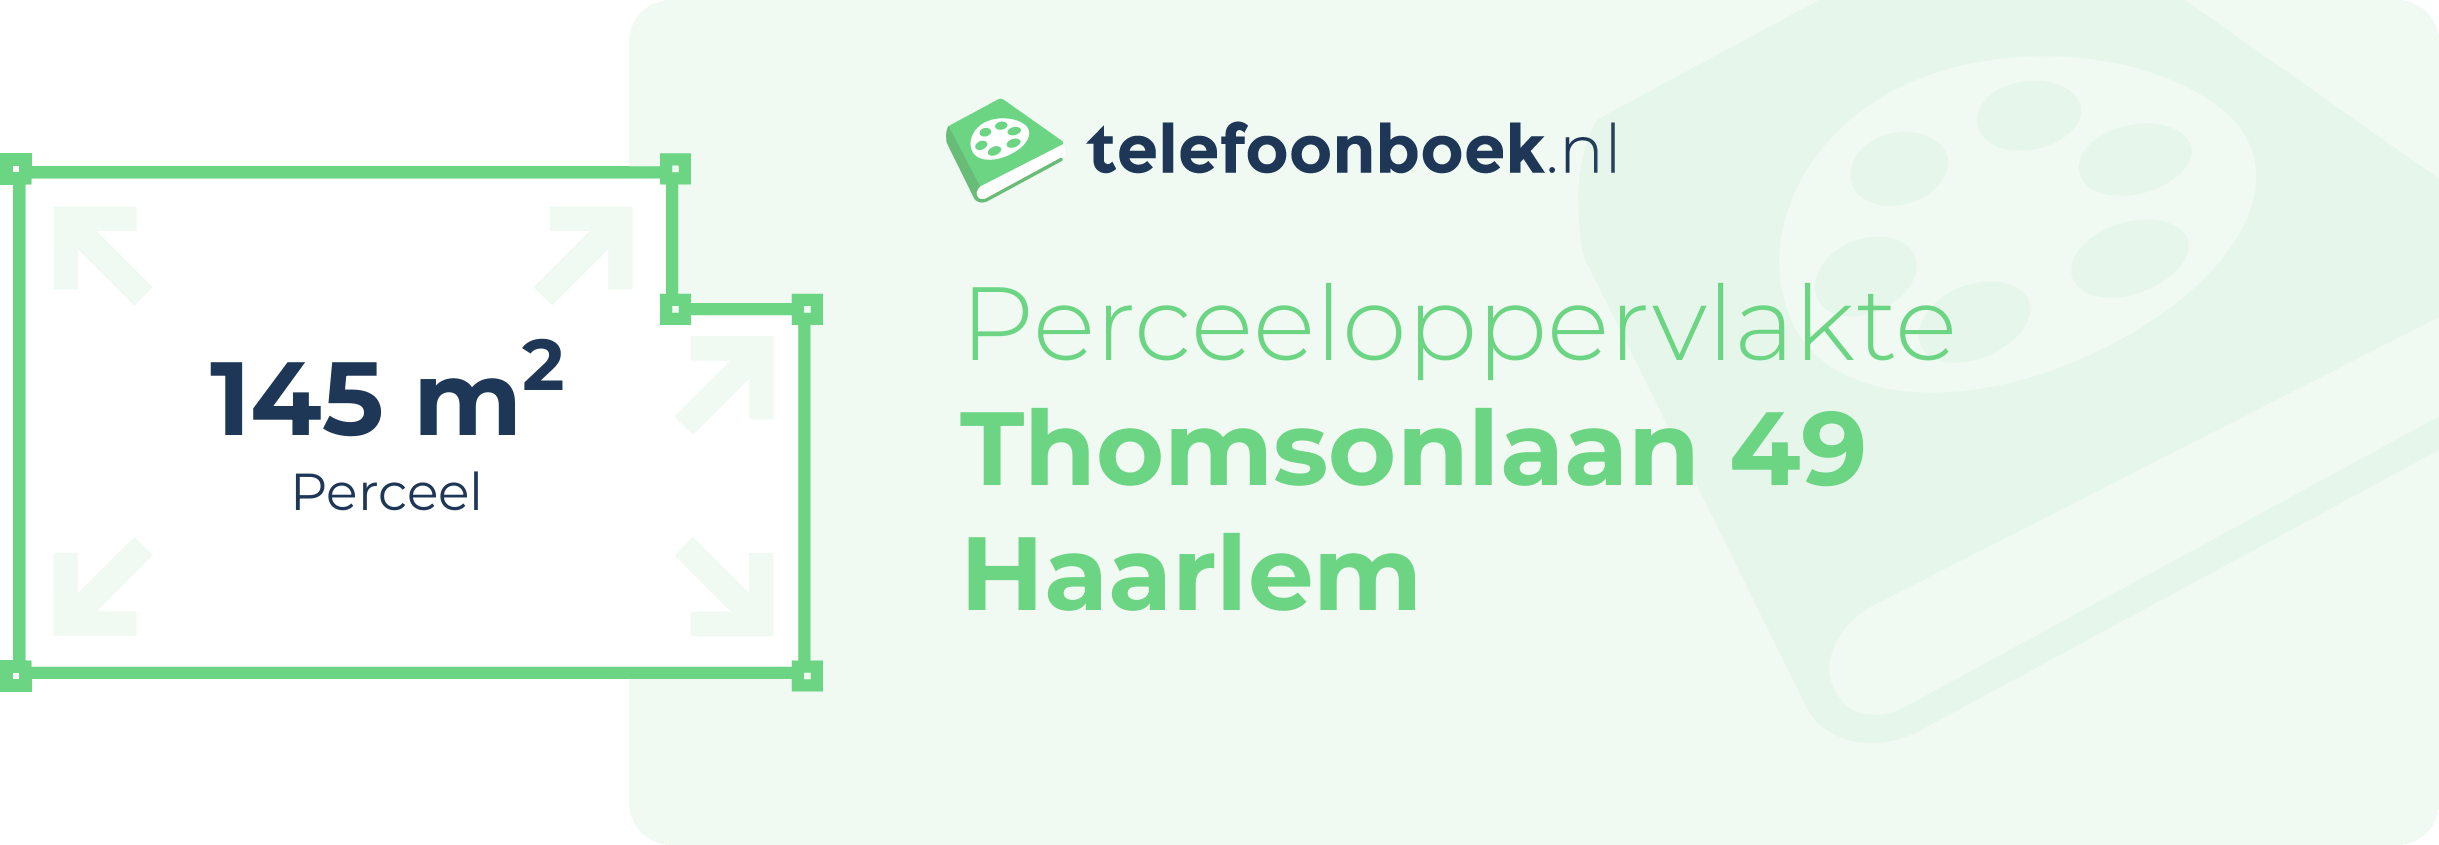 Perceeloppervlakte Thomsonlaan 49 Haarlem